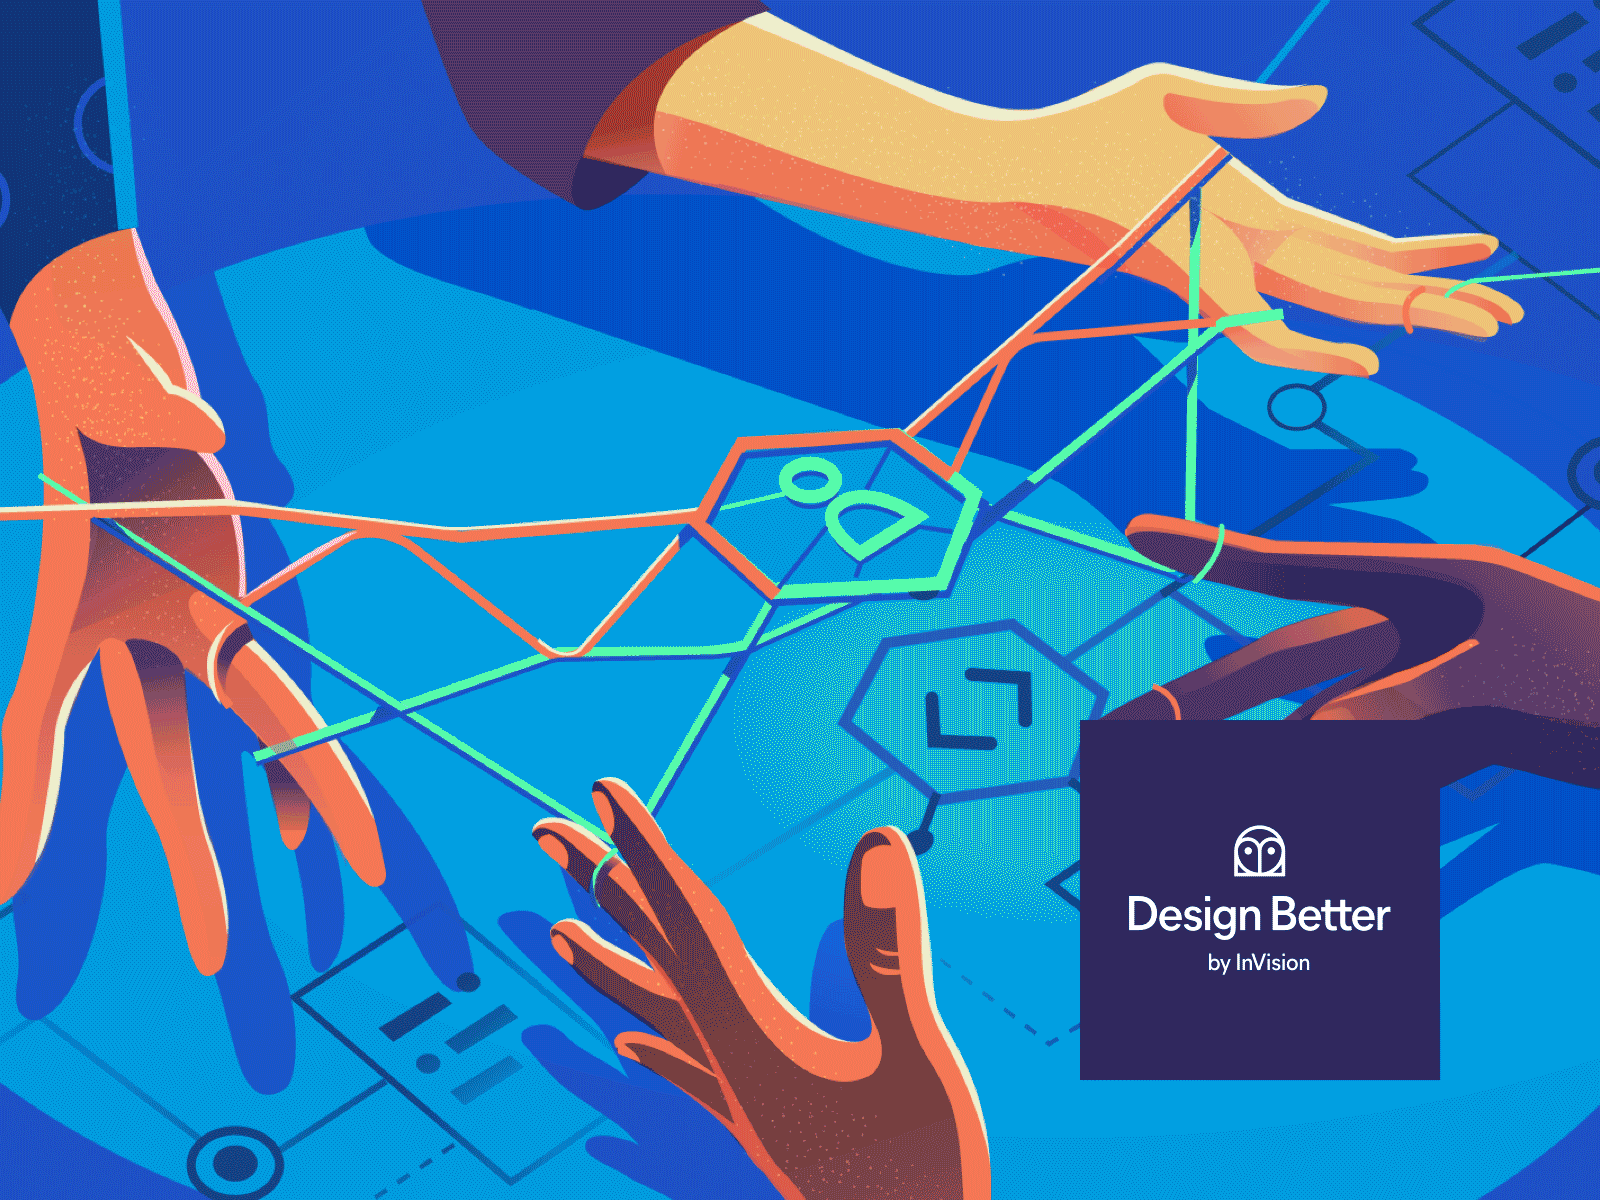 Illustrating the bridge between design and development